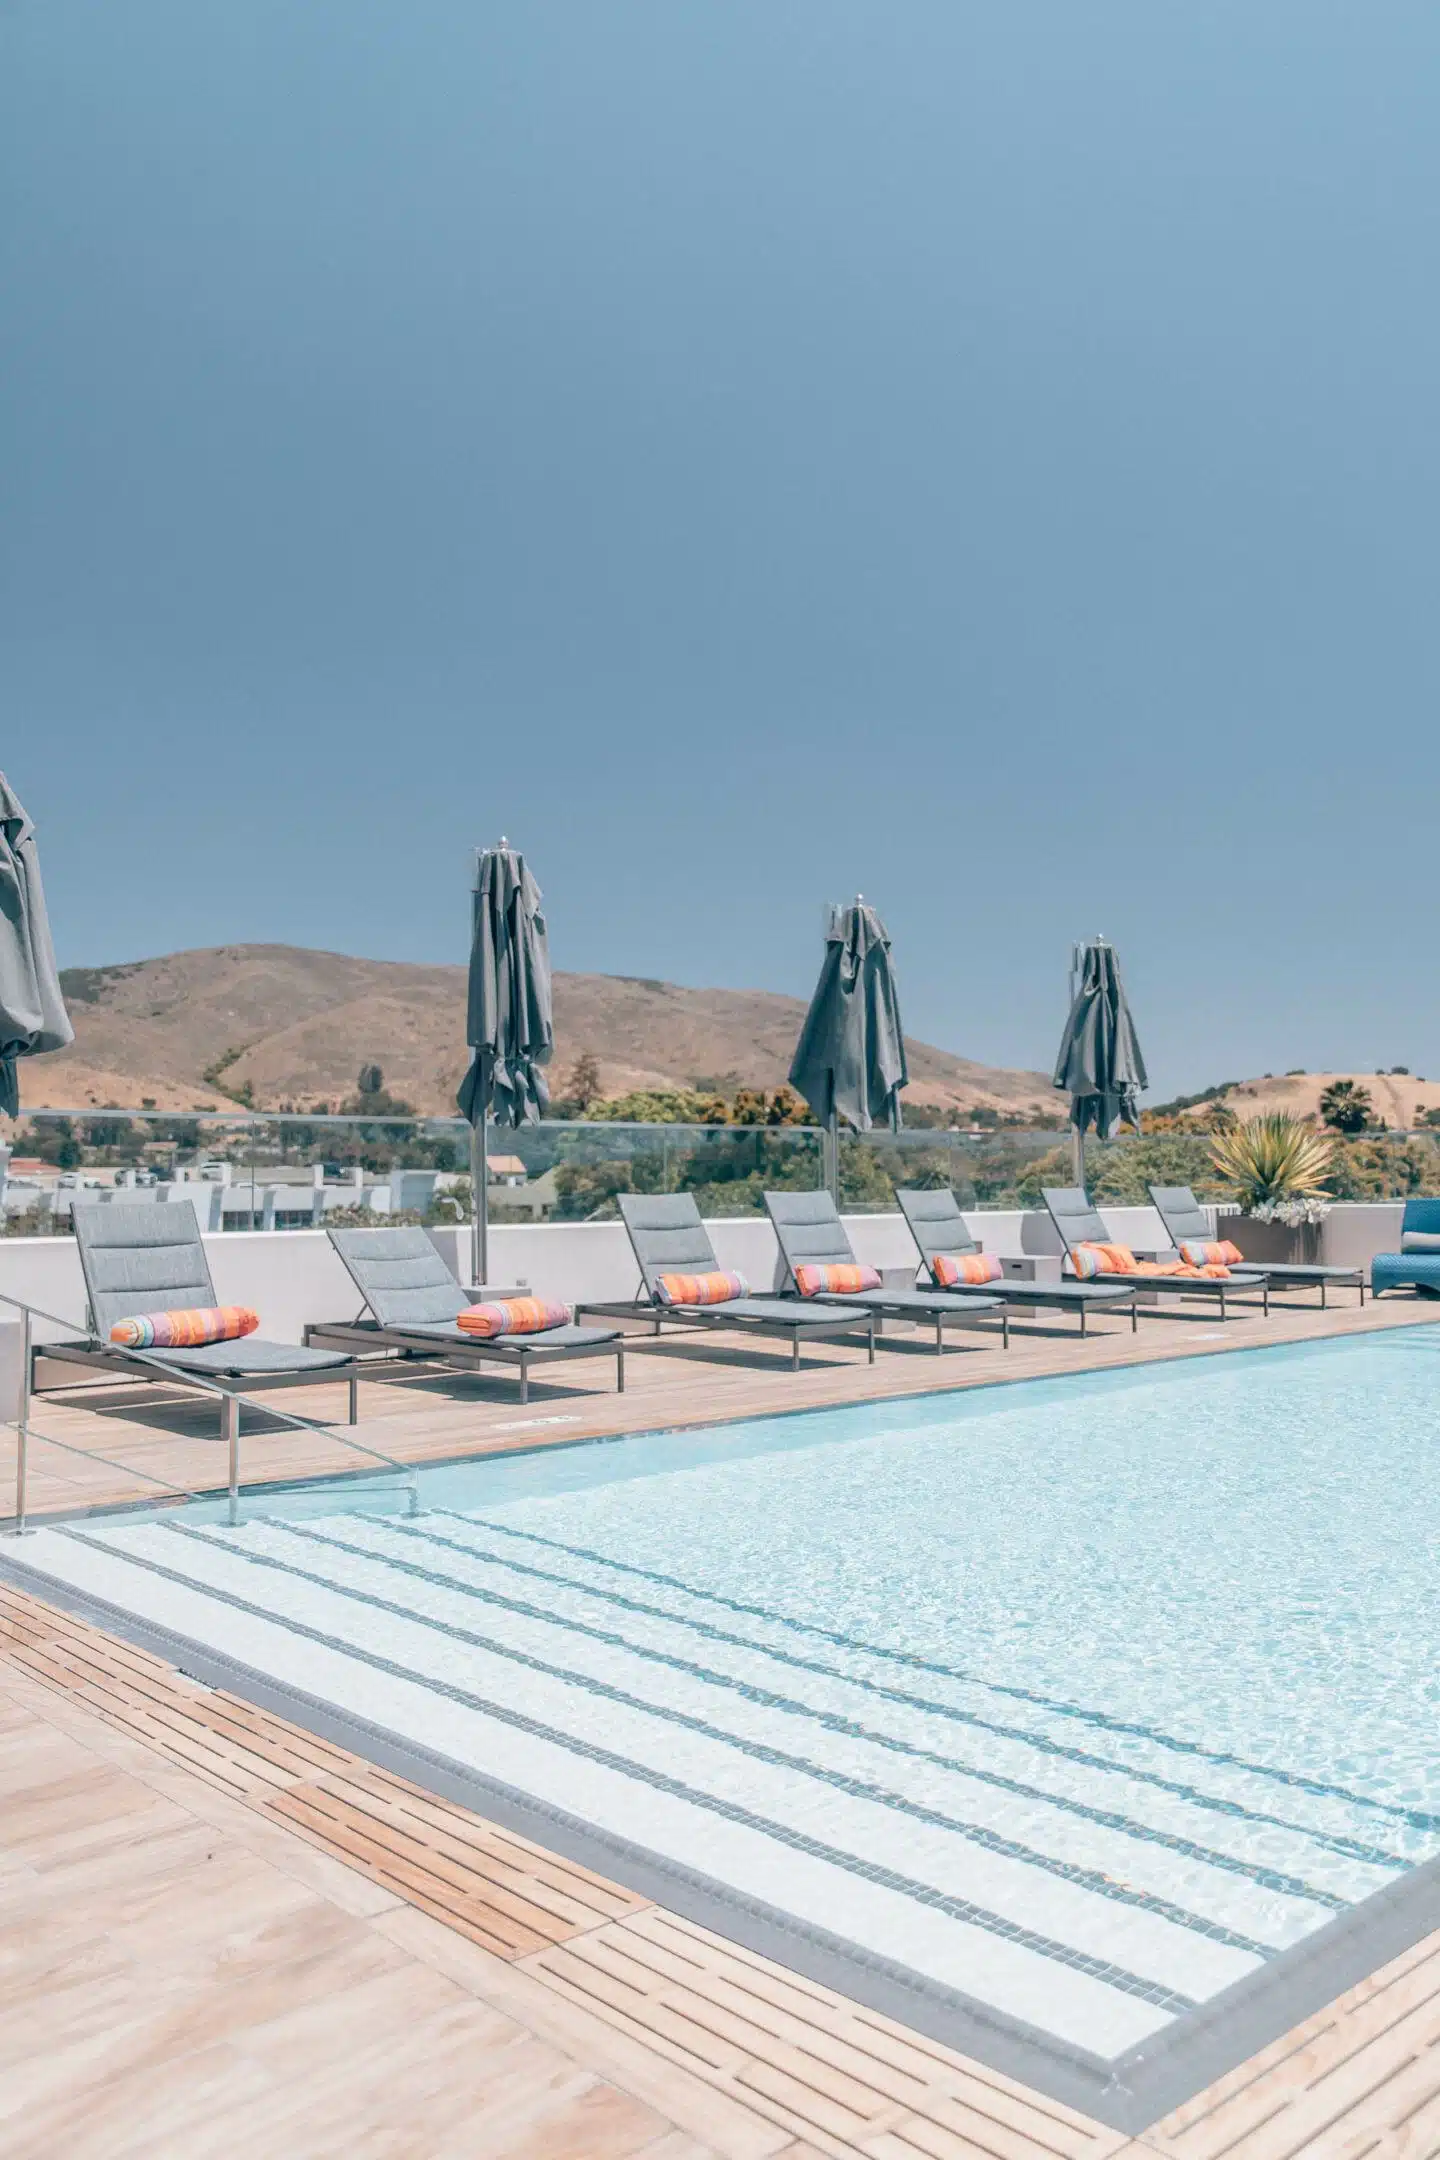 Hotel Cerro San Luis Obispo, by travel blogger What The Fab